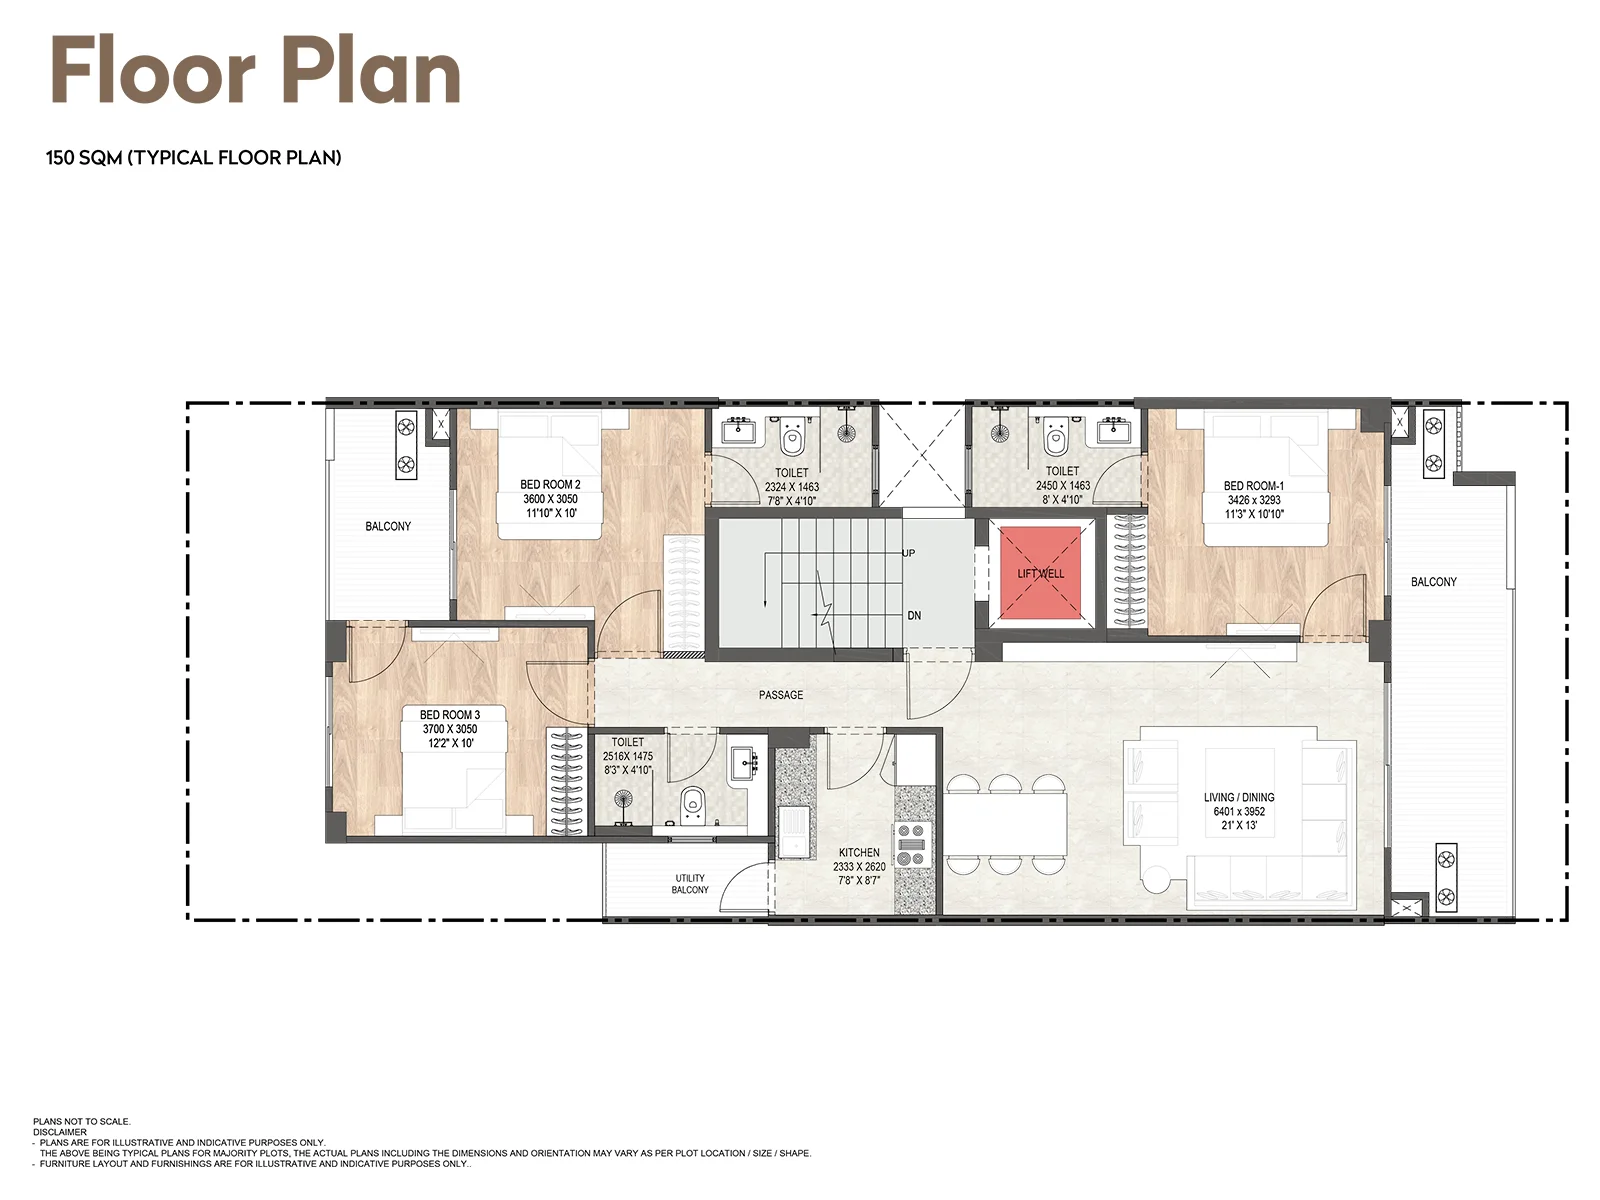 3 BHK - Typical Floor Plan